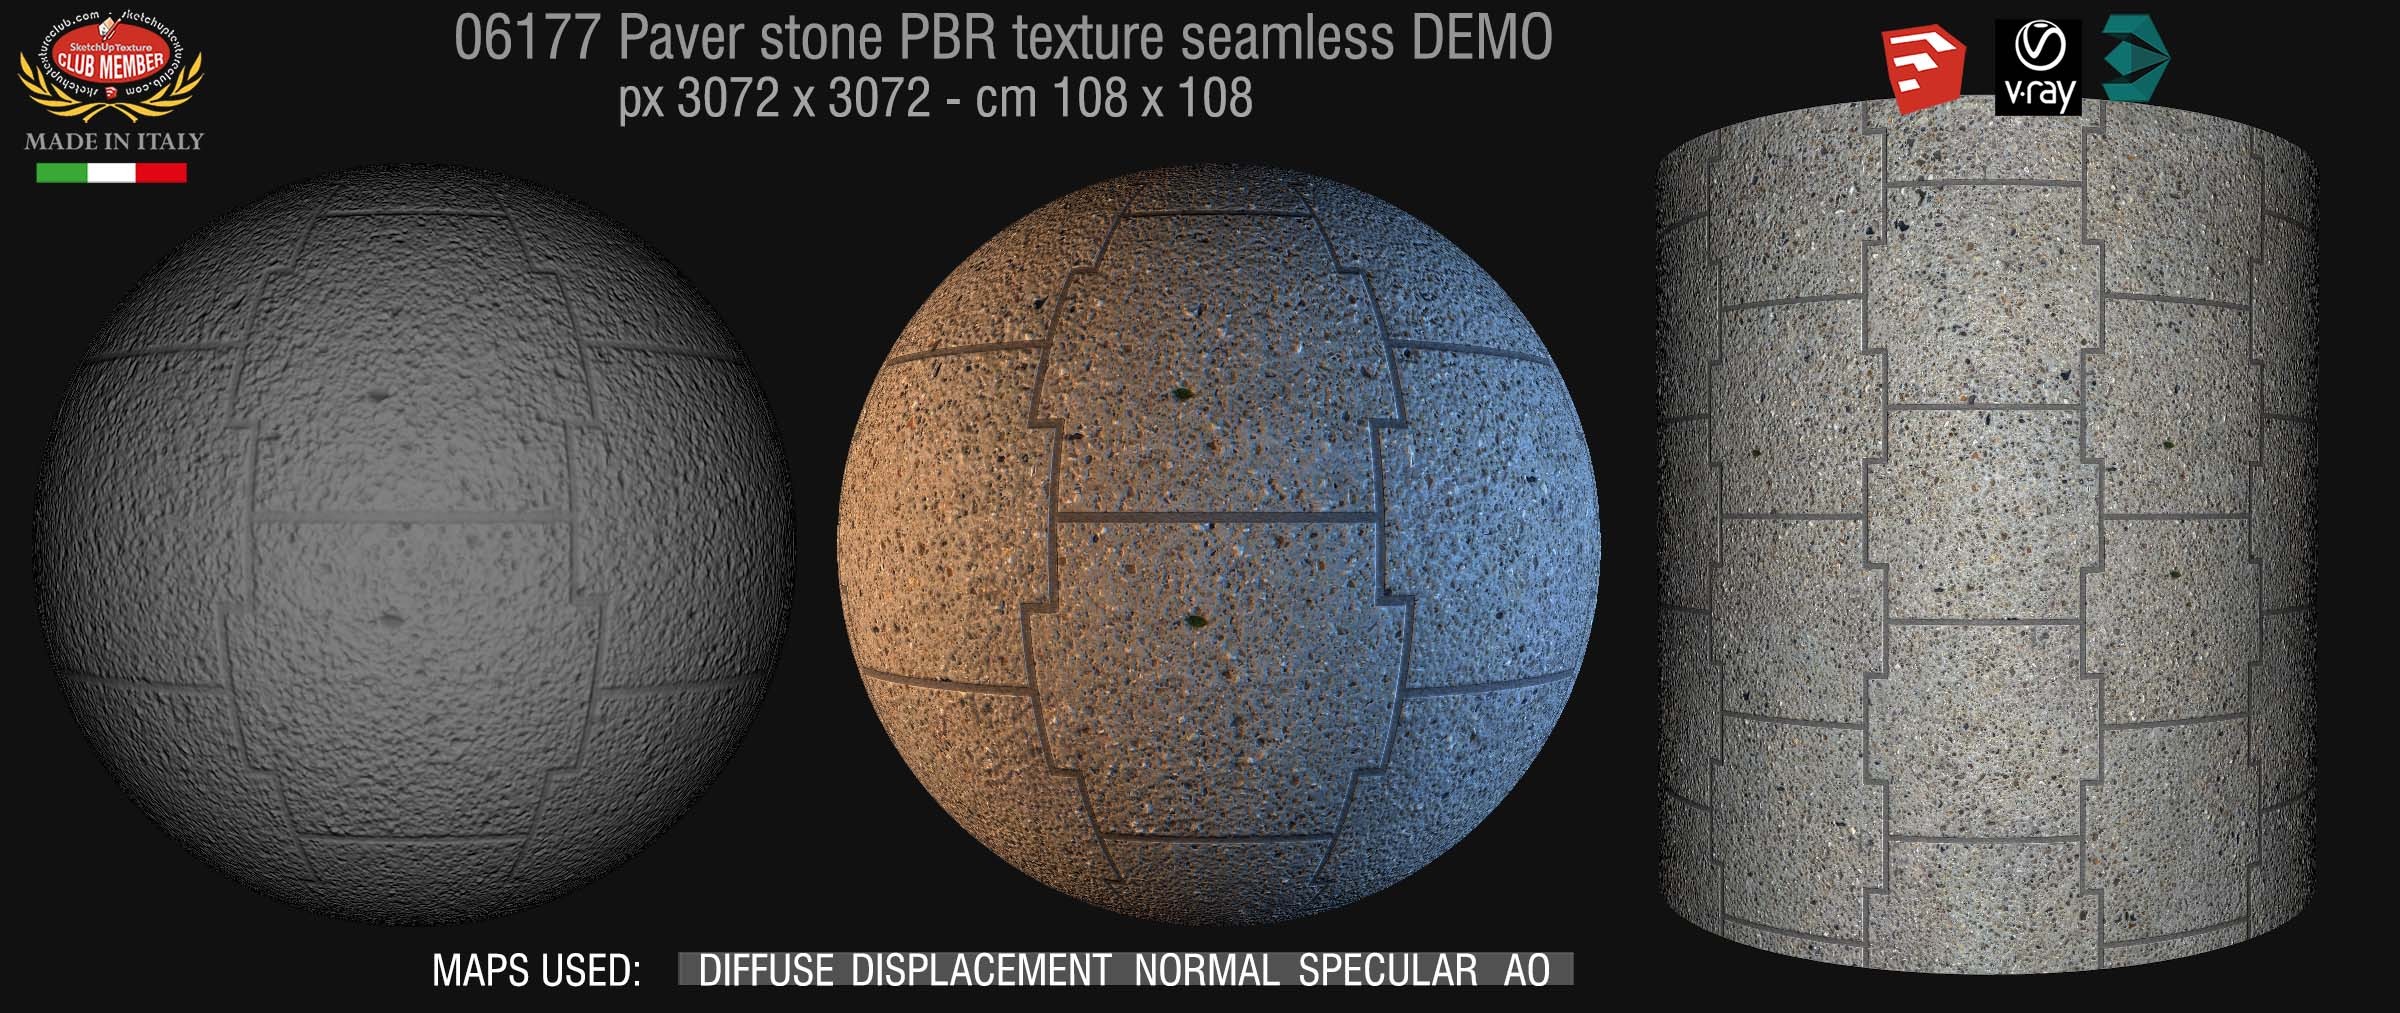 06177 paver stone PBR texture seamless DEMO